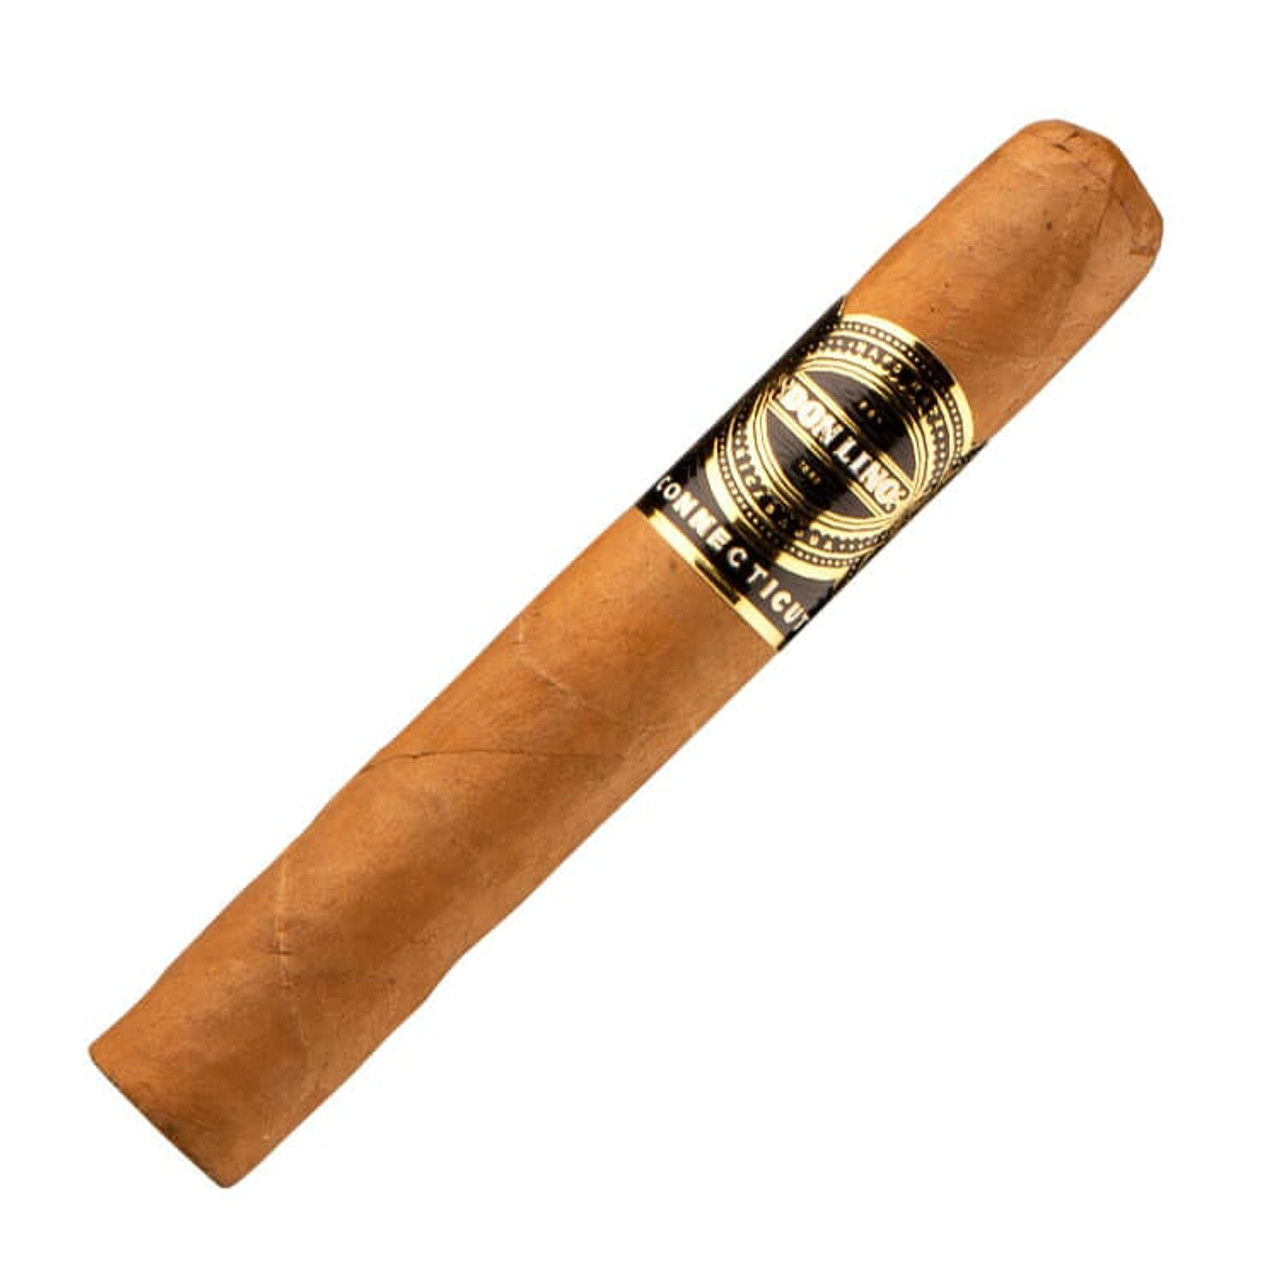 Don Lino Connecticut Gran Toro Cigars - 6 x 60 Single